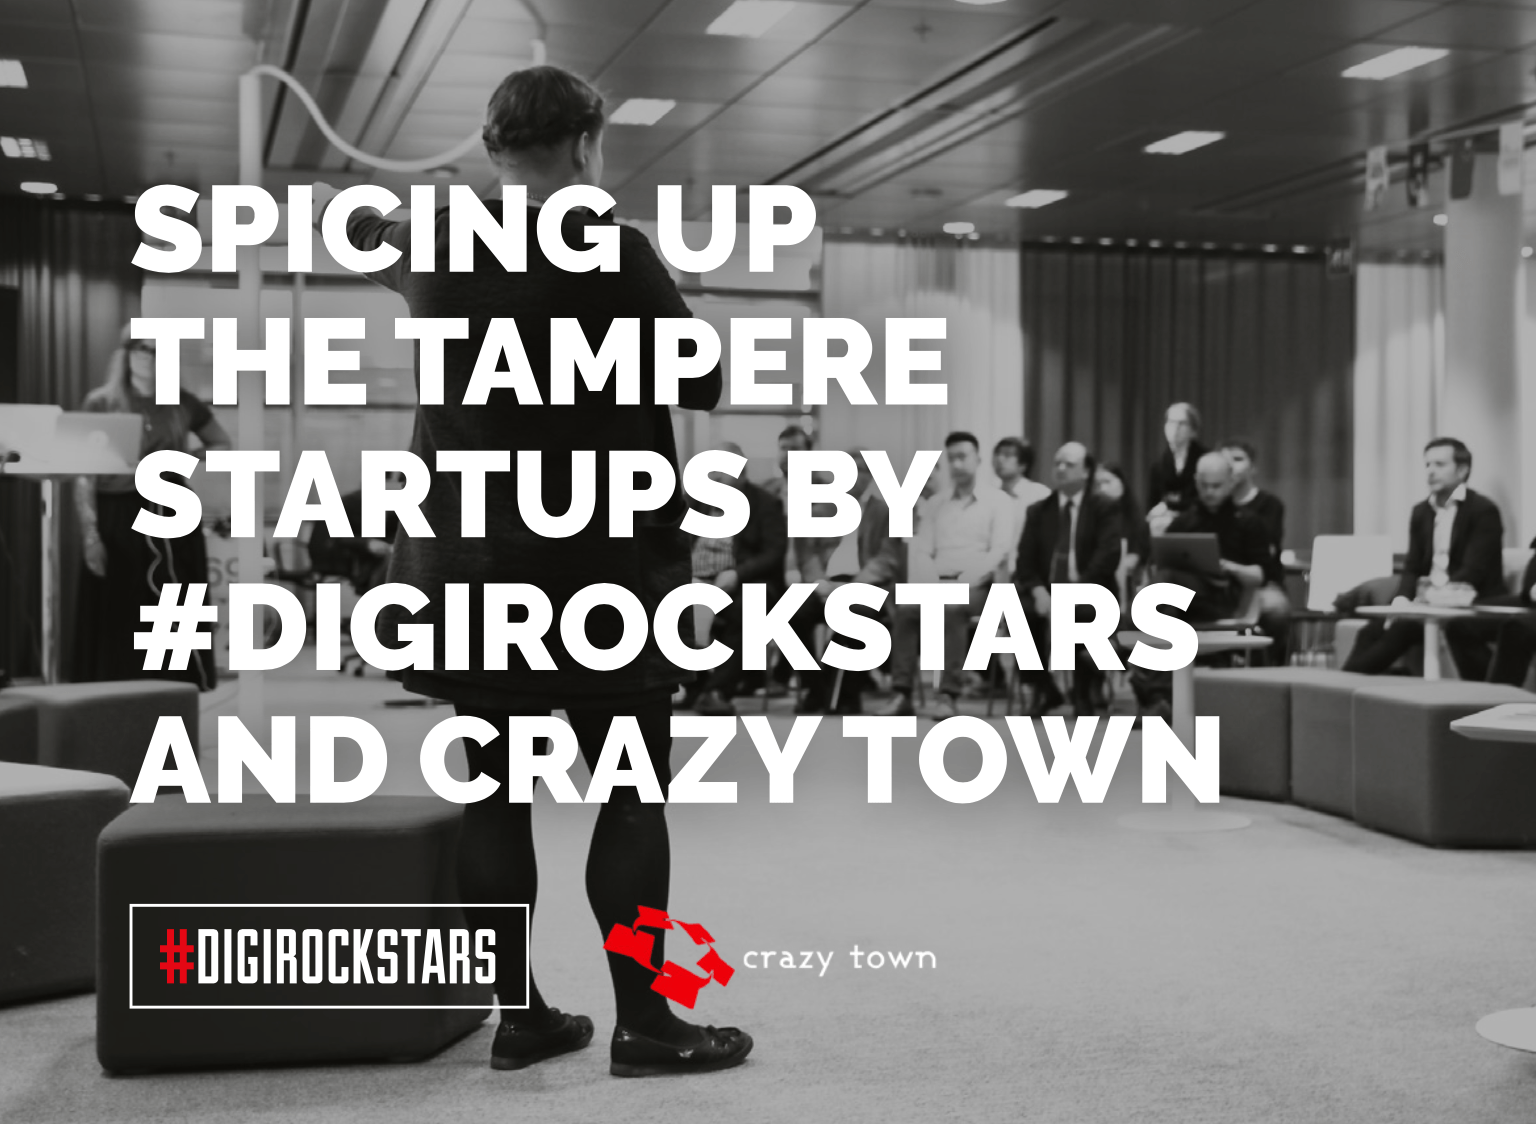 #digirockstars lean startup workshops at Crazy Town Tampere from August 29 onwards